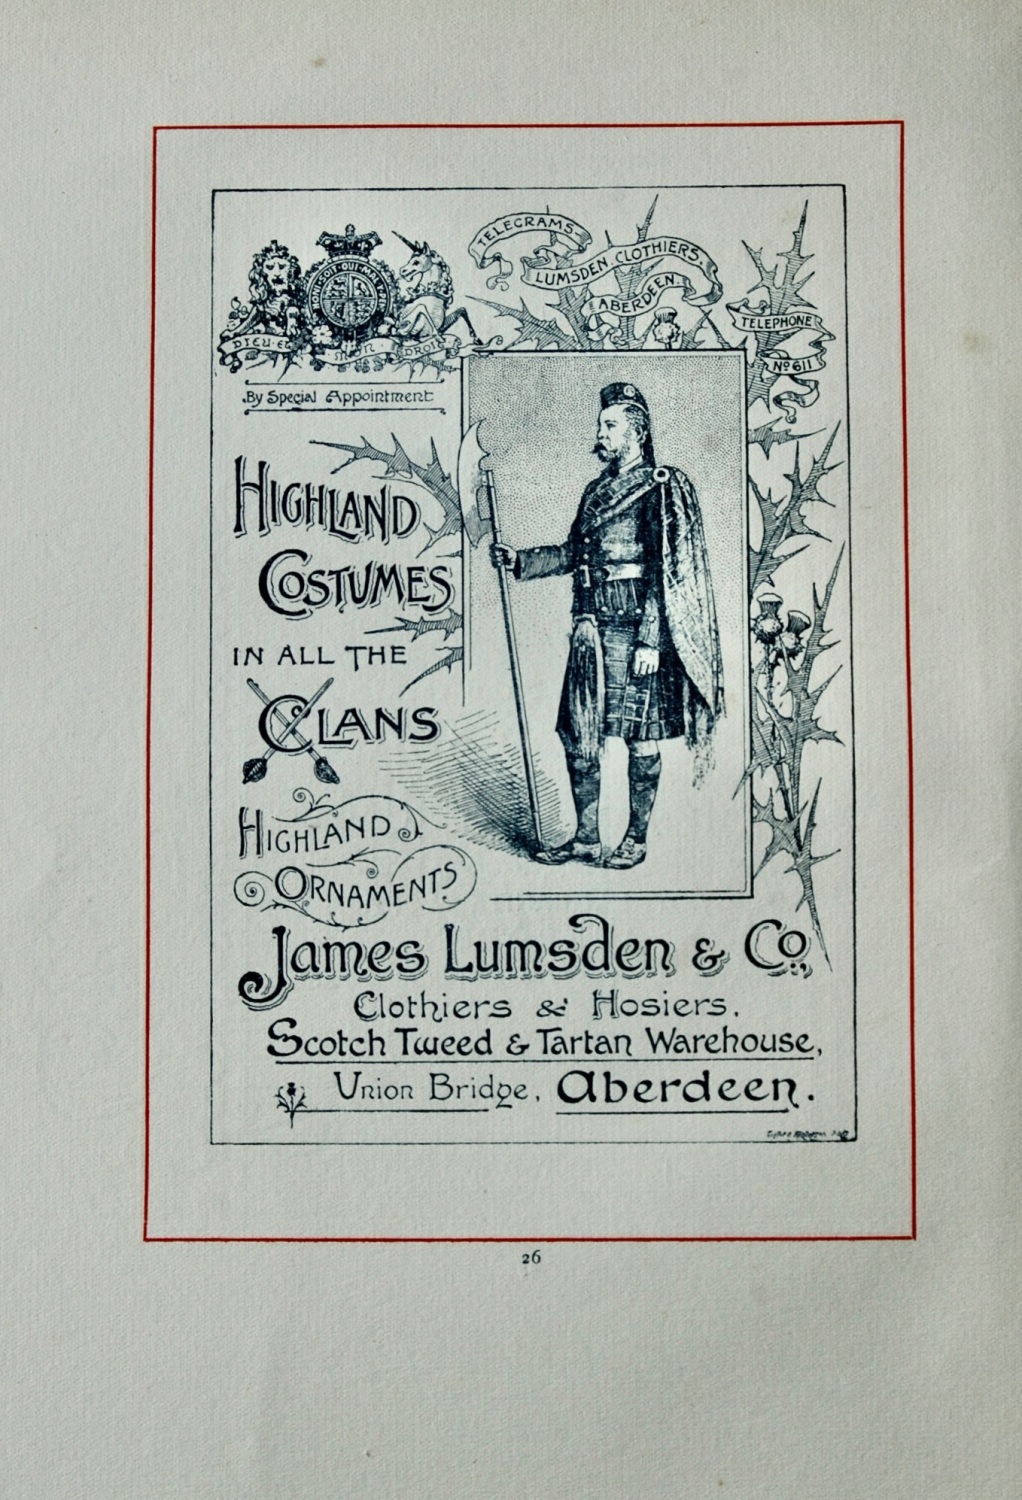 James Lumsden & Co., Clothiers & Hosiers, Union Bridge, Aberdeen.  1894.